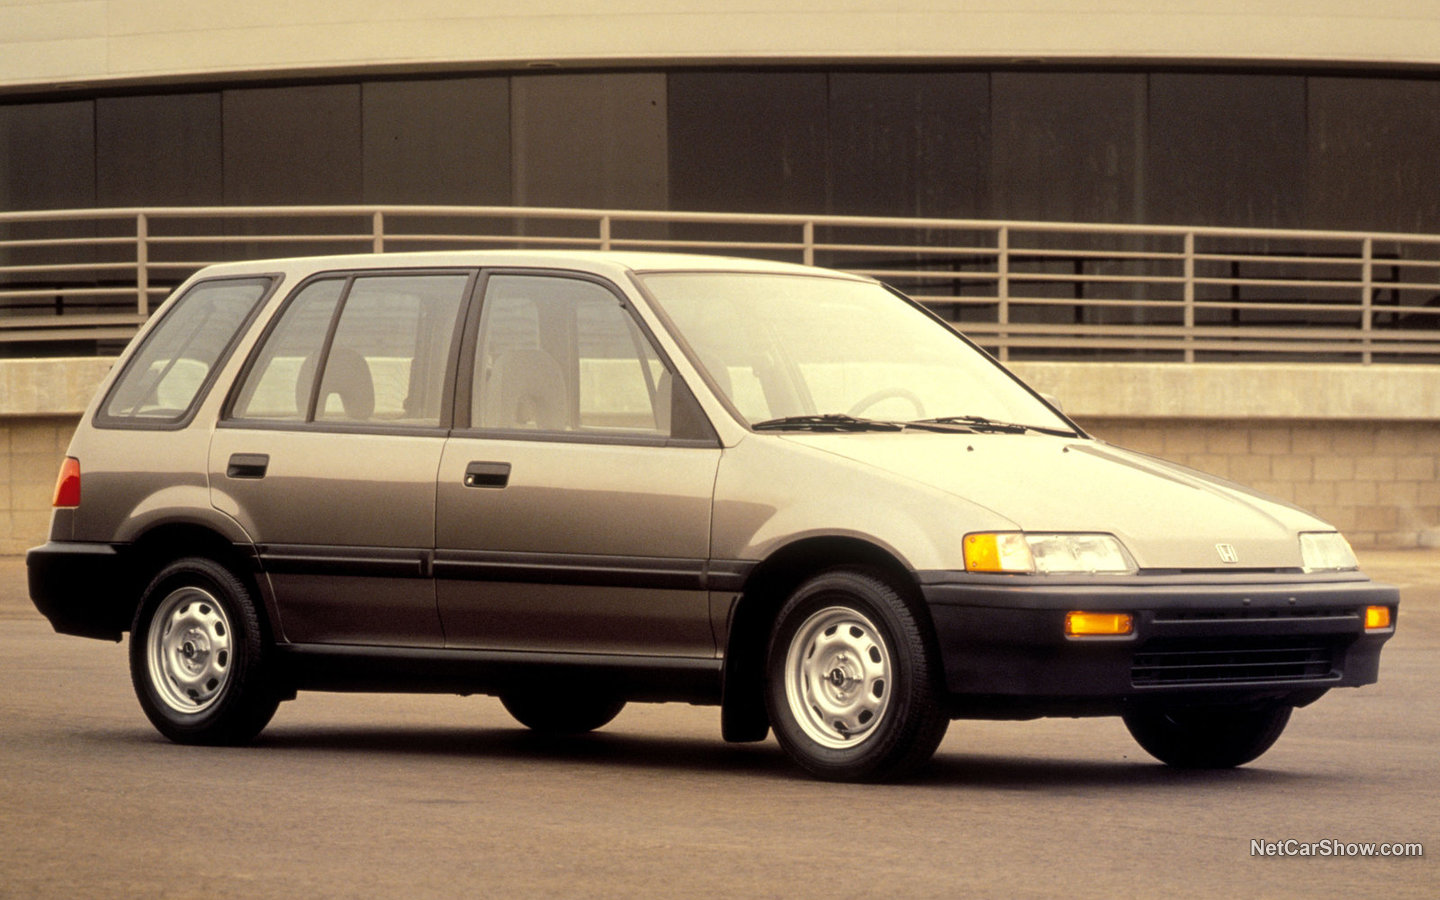 Honda Civic Wagon 1989 5d6a65f9